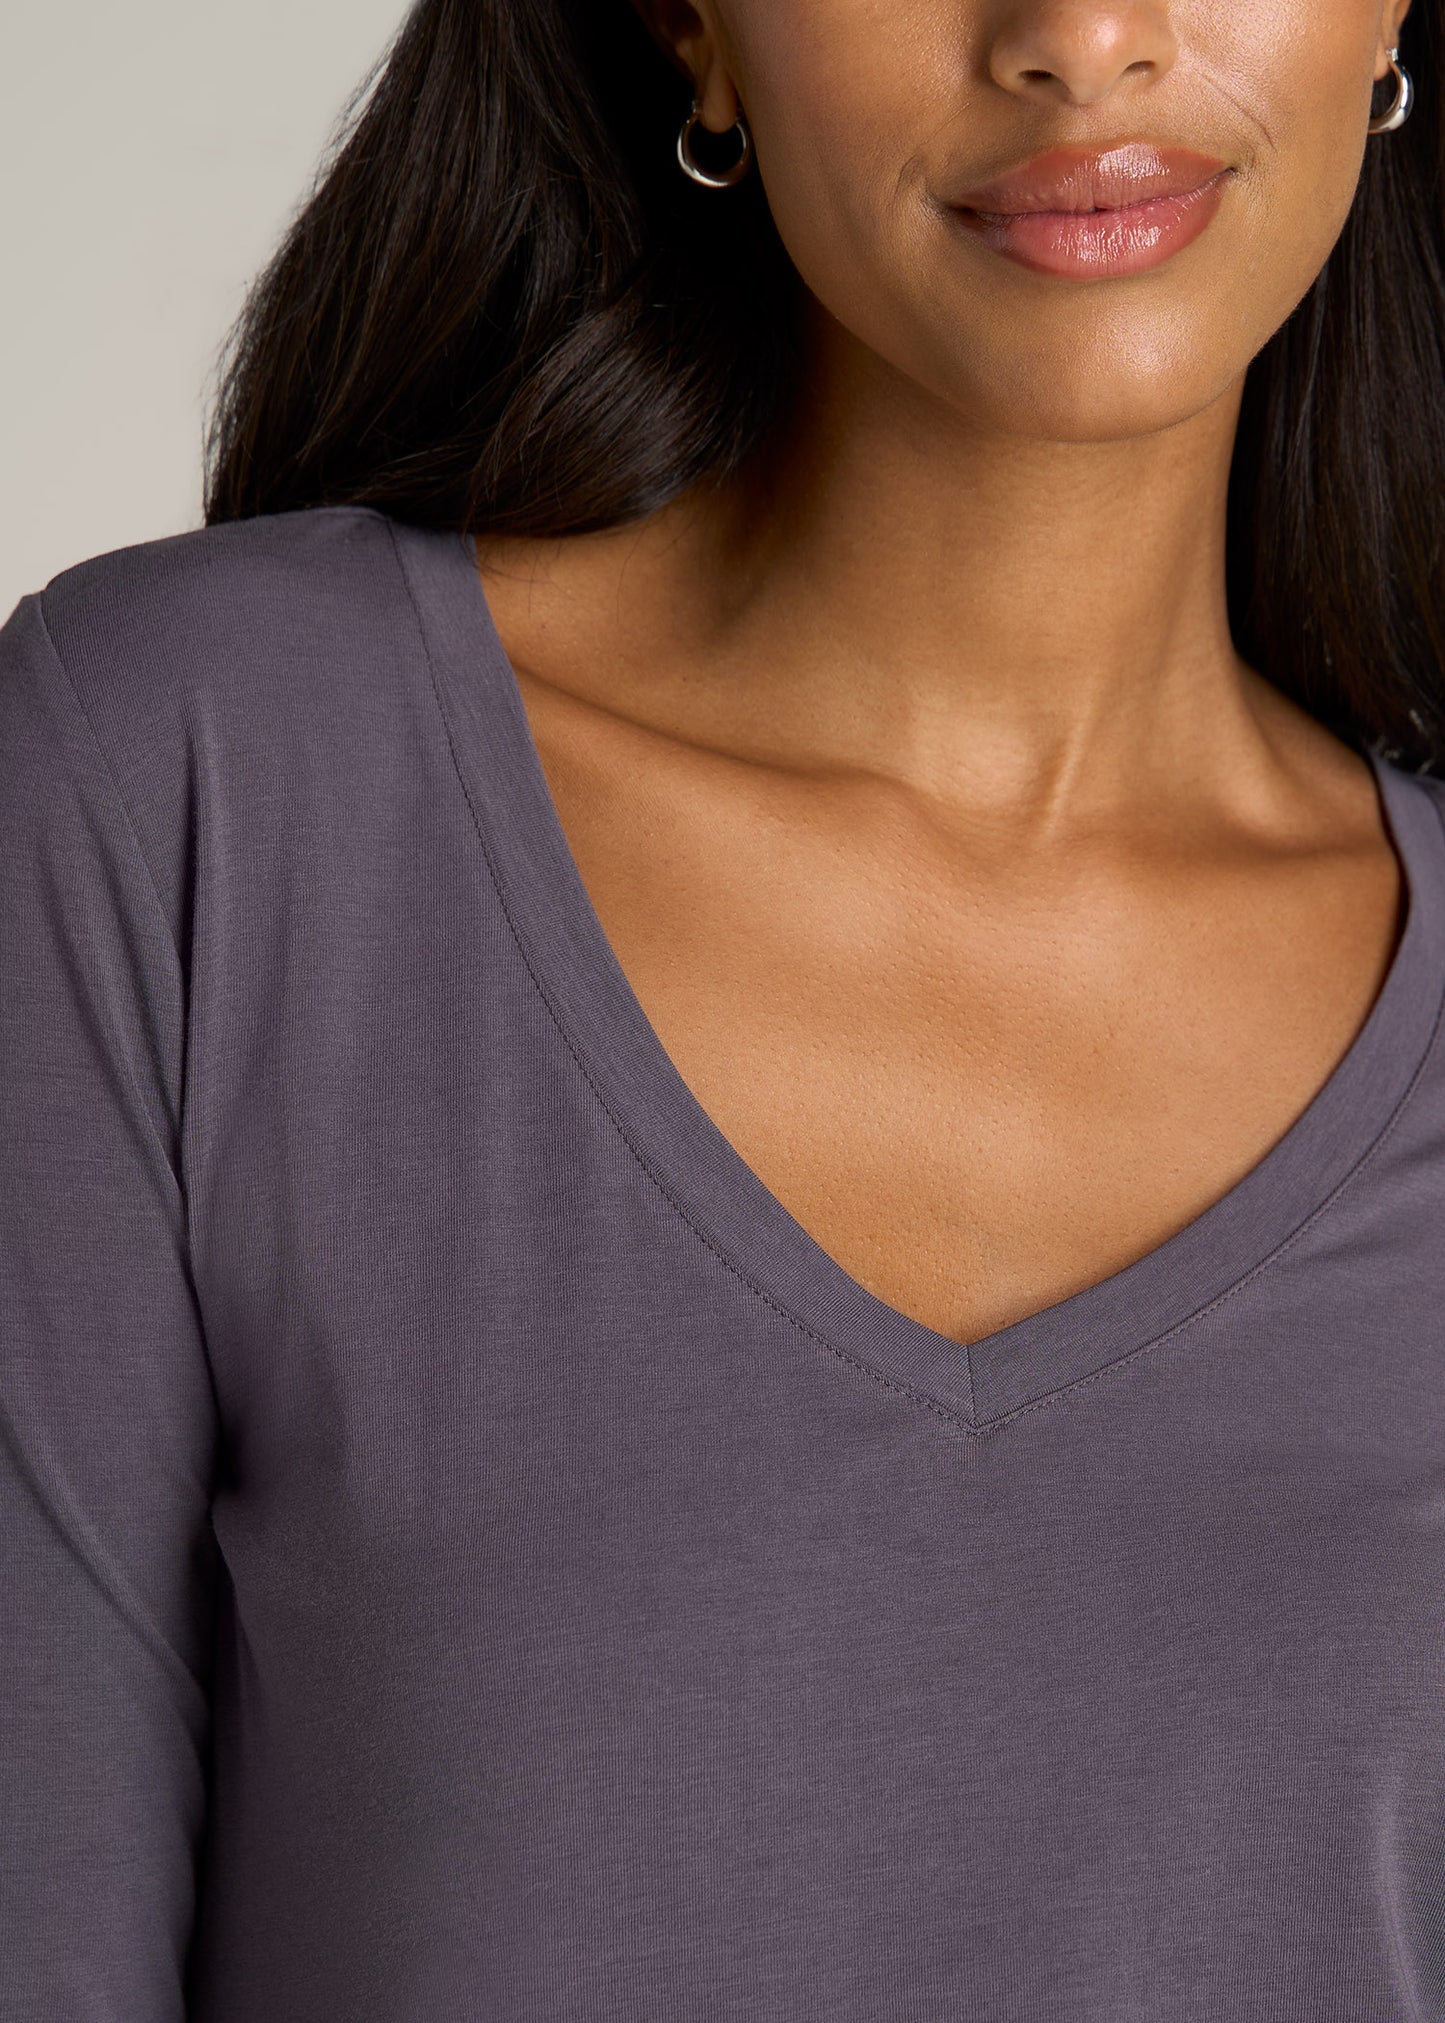 Long Sleeve V-neck Tee Shirt (Small, Charcoal) at  Women's Clothing  store: Tank Top And Cami Shirts